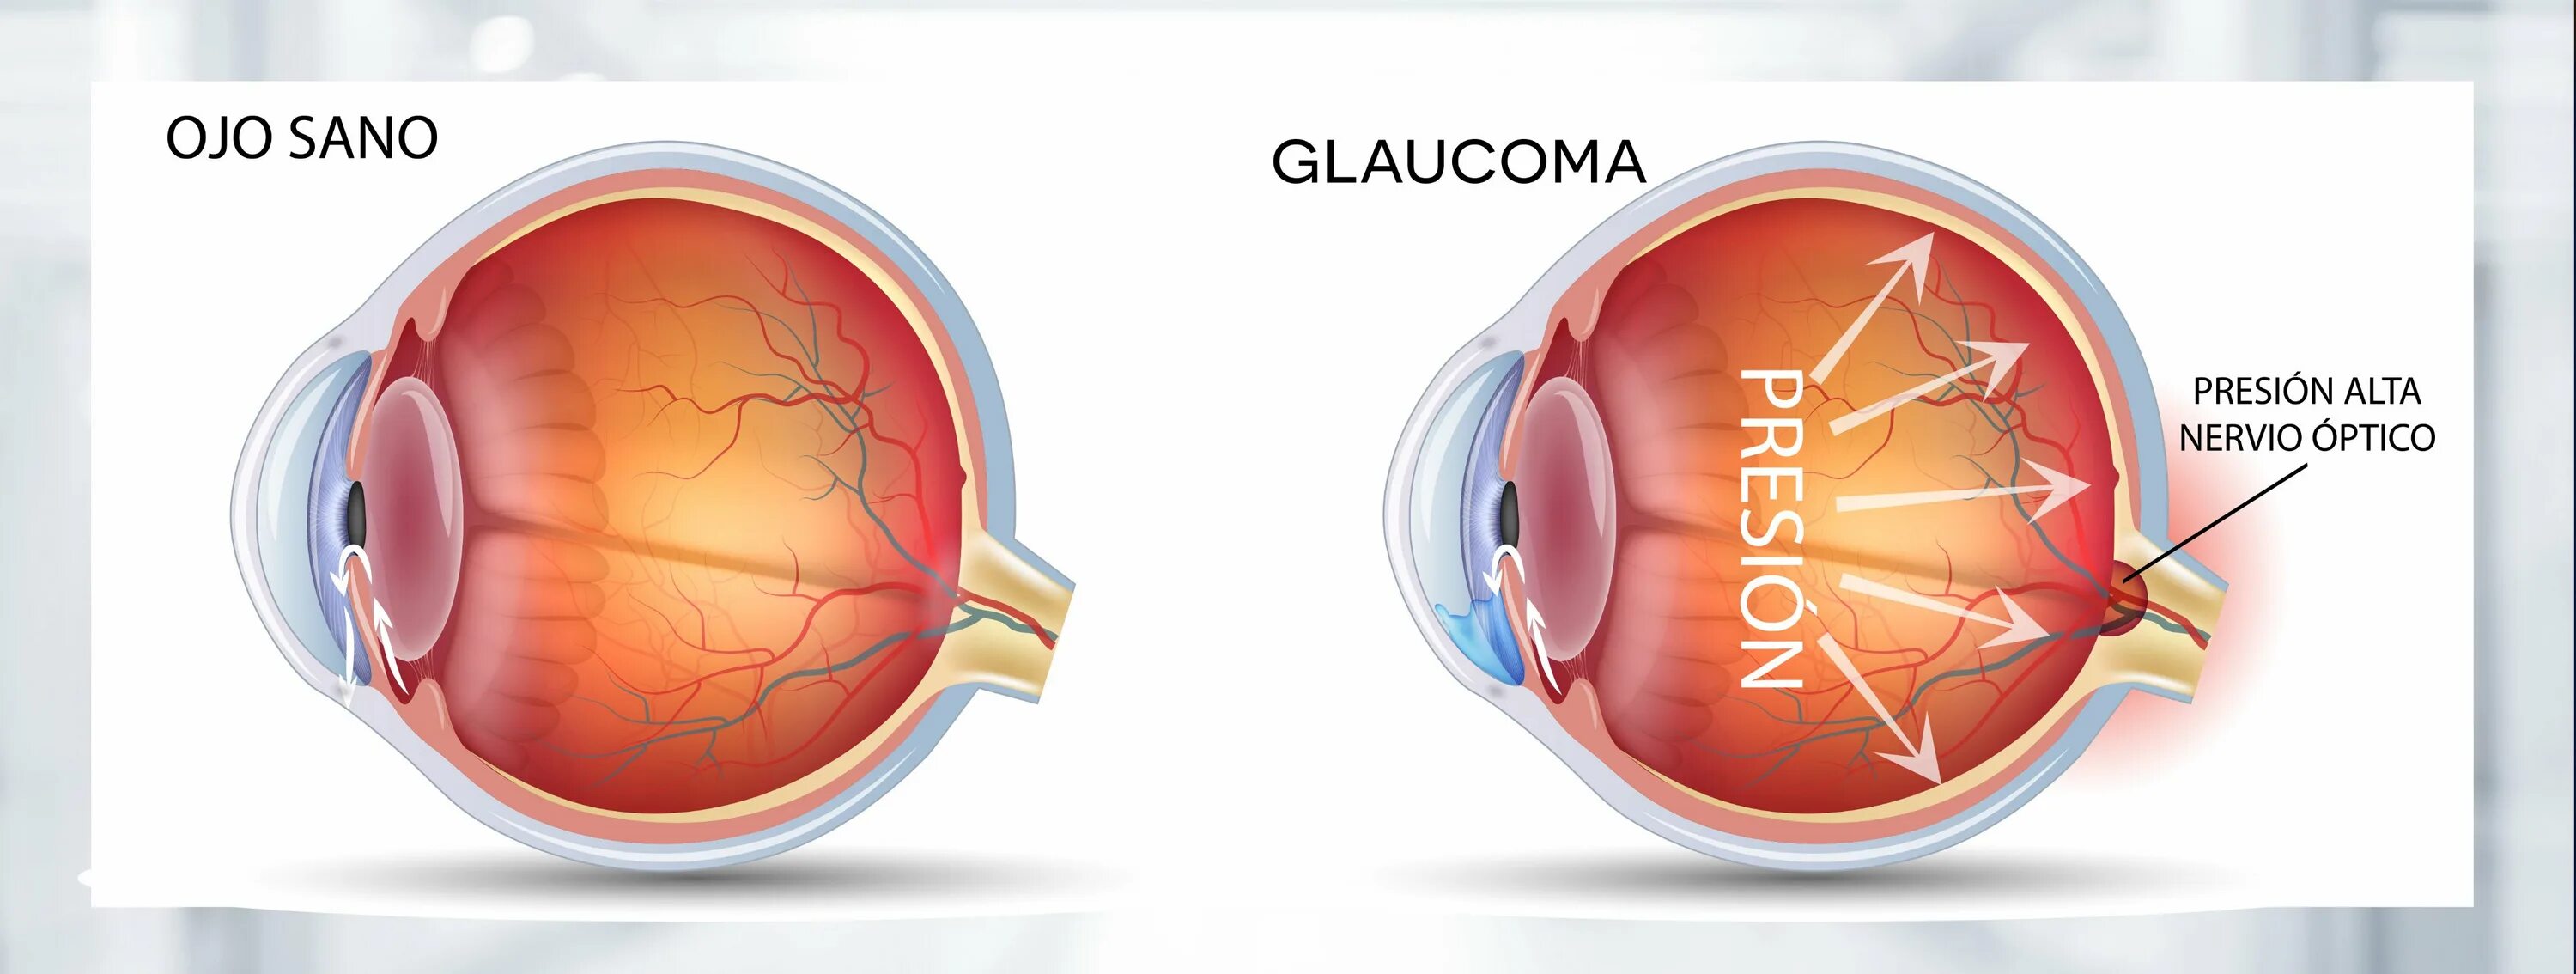 Причины глаукомы глаза. Терминальная глаукома.